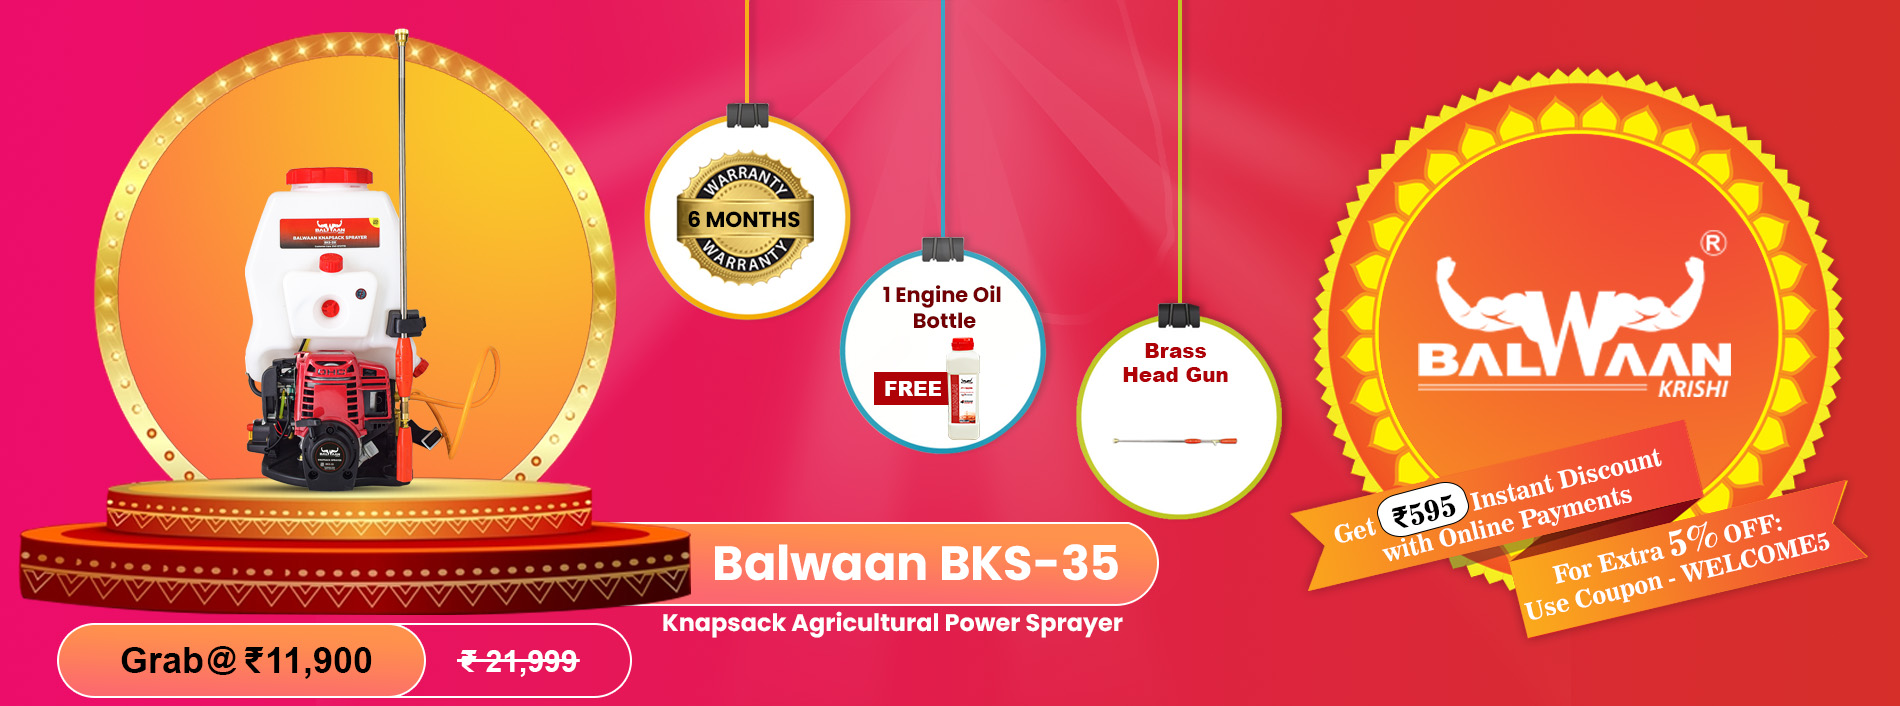 Balwaan_knapsack_sprayer_BKS-35